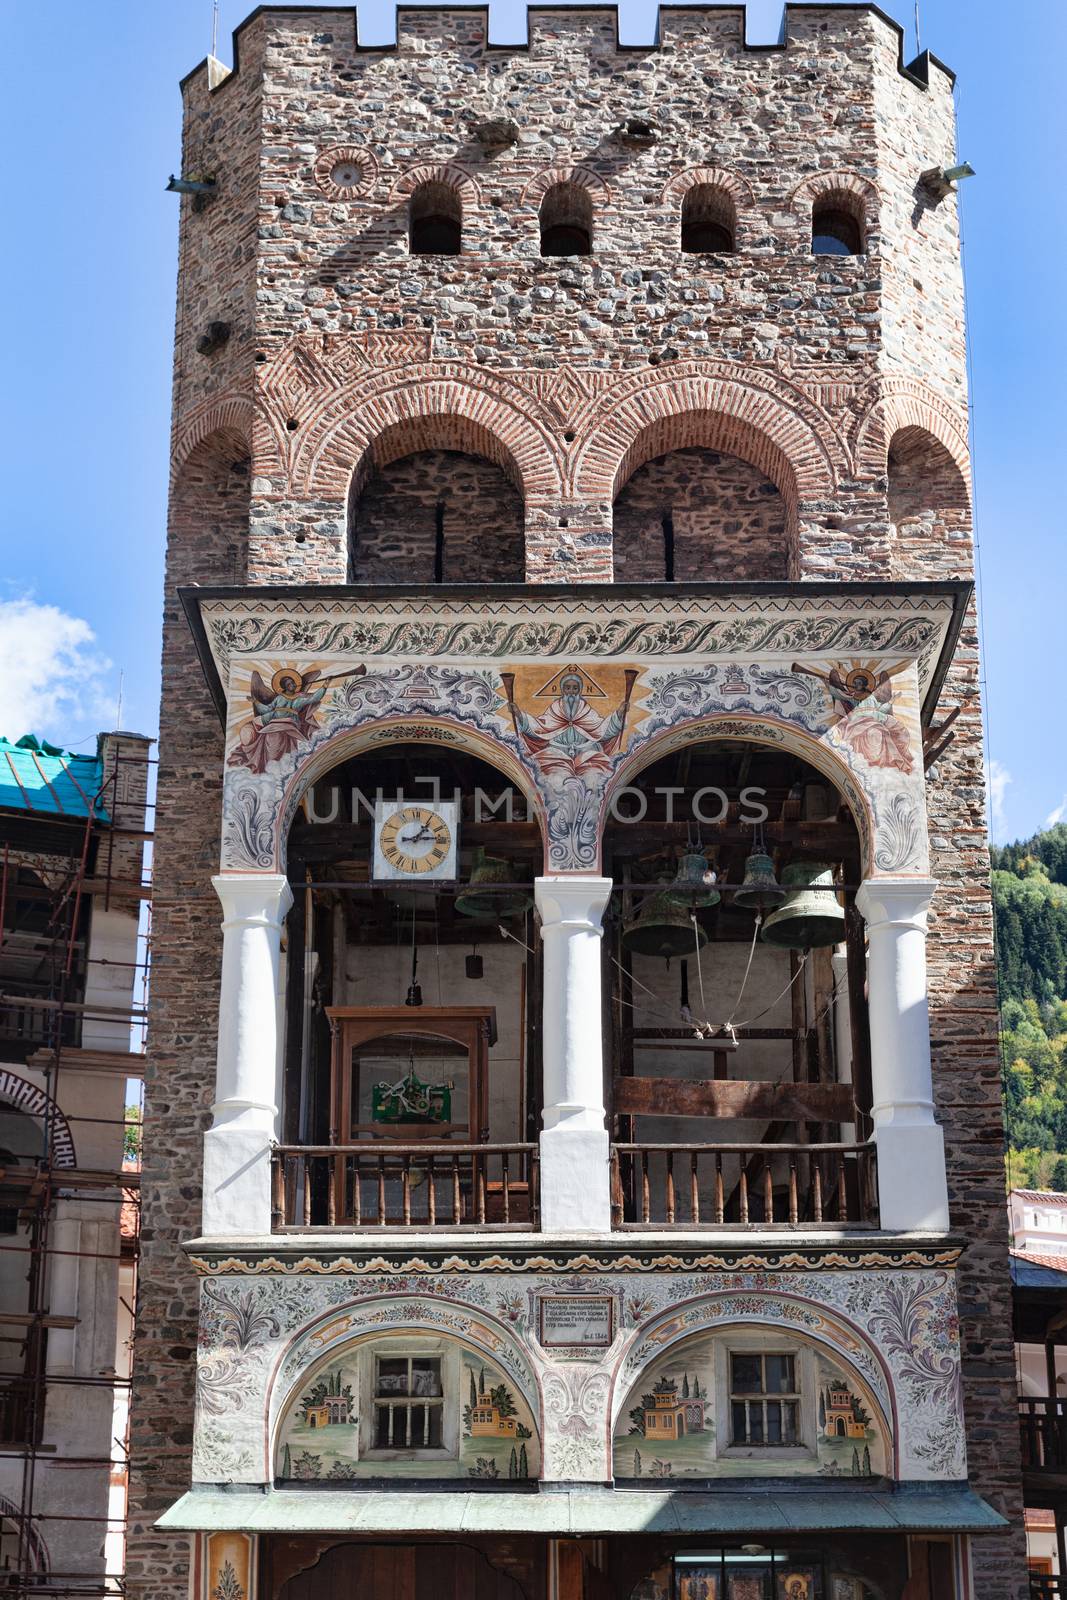 Rila Monastery bell tower, Bulgaria by vlad-m